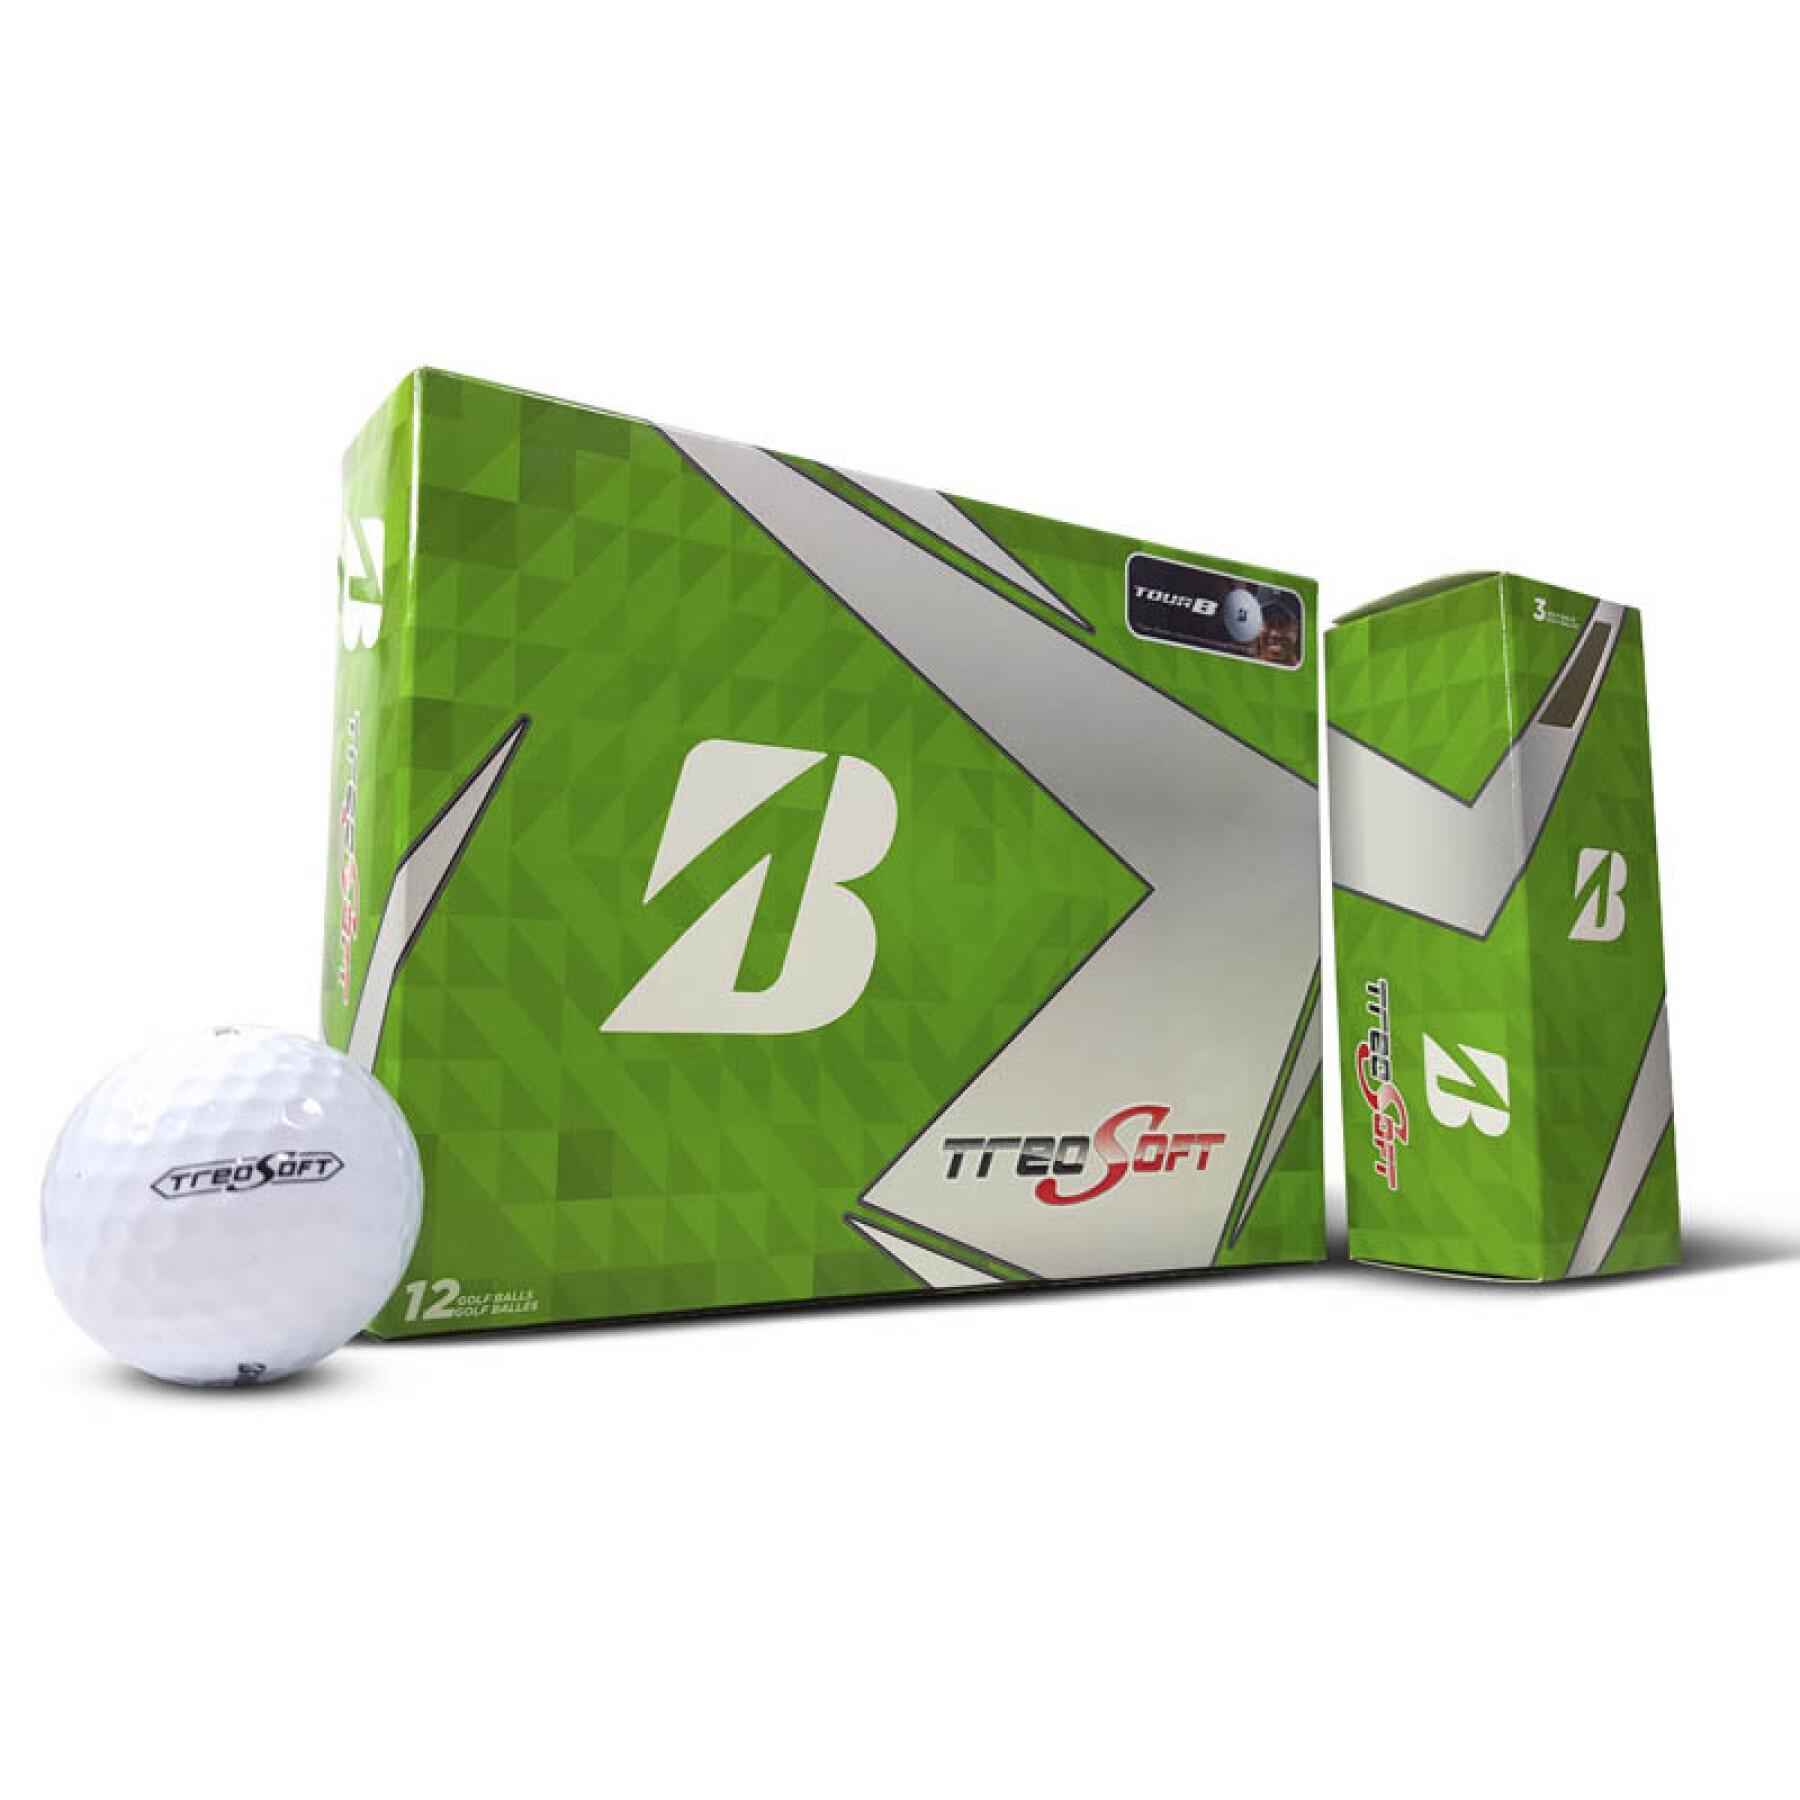 Golf balls Bridgestone treo soft